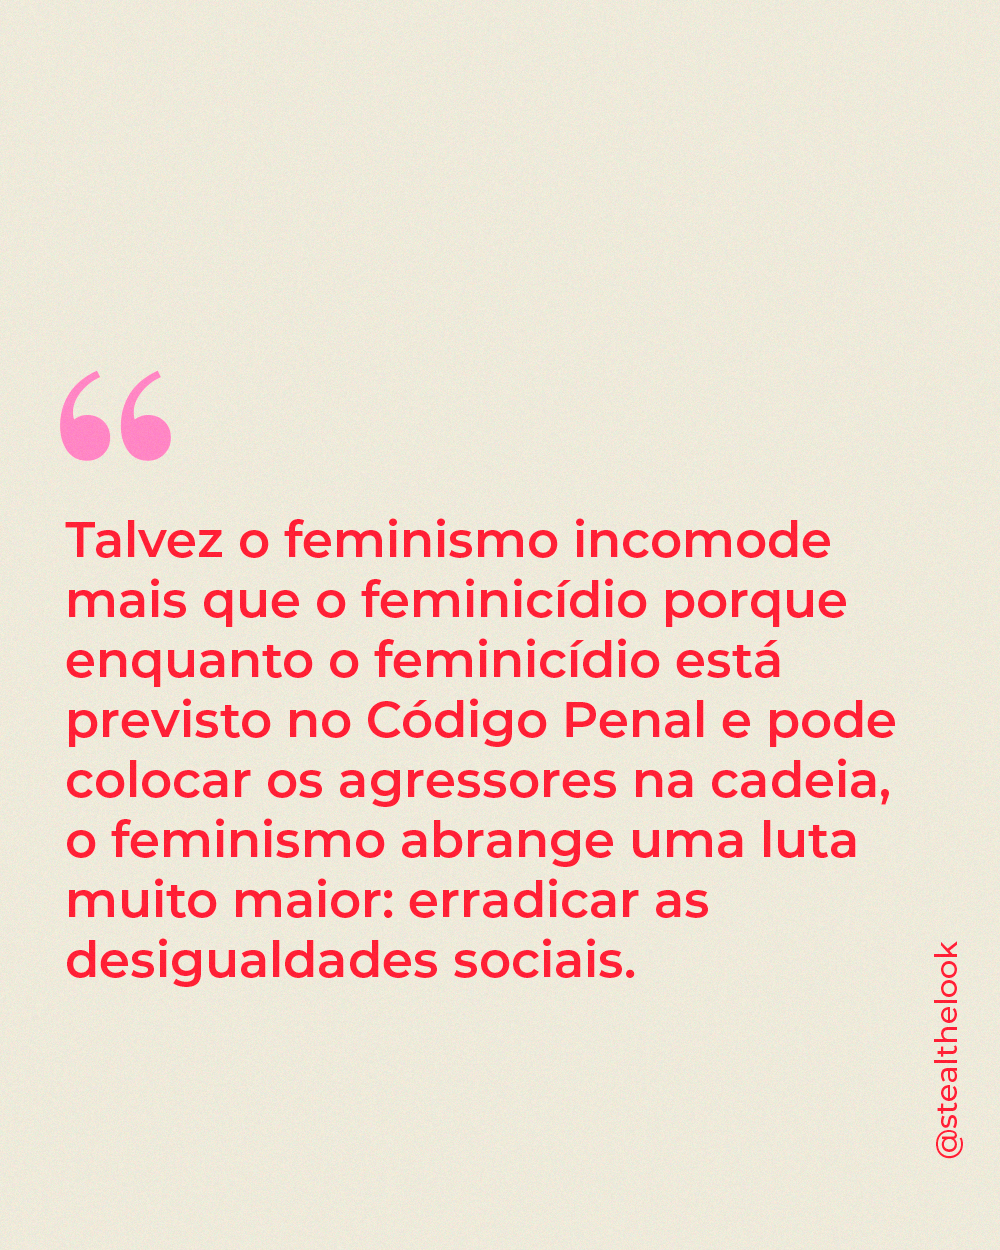 It girls - Feminicídio - Feminismo - Outono - Street Style - https://stealthelook.com.br